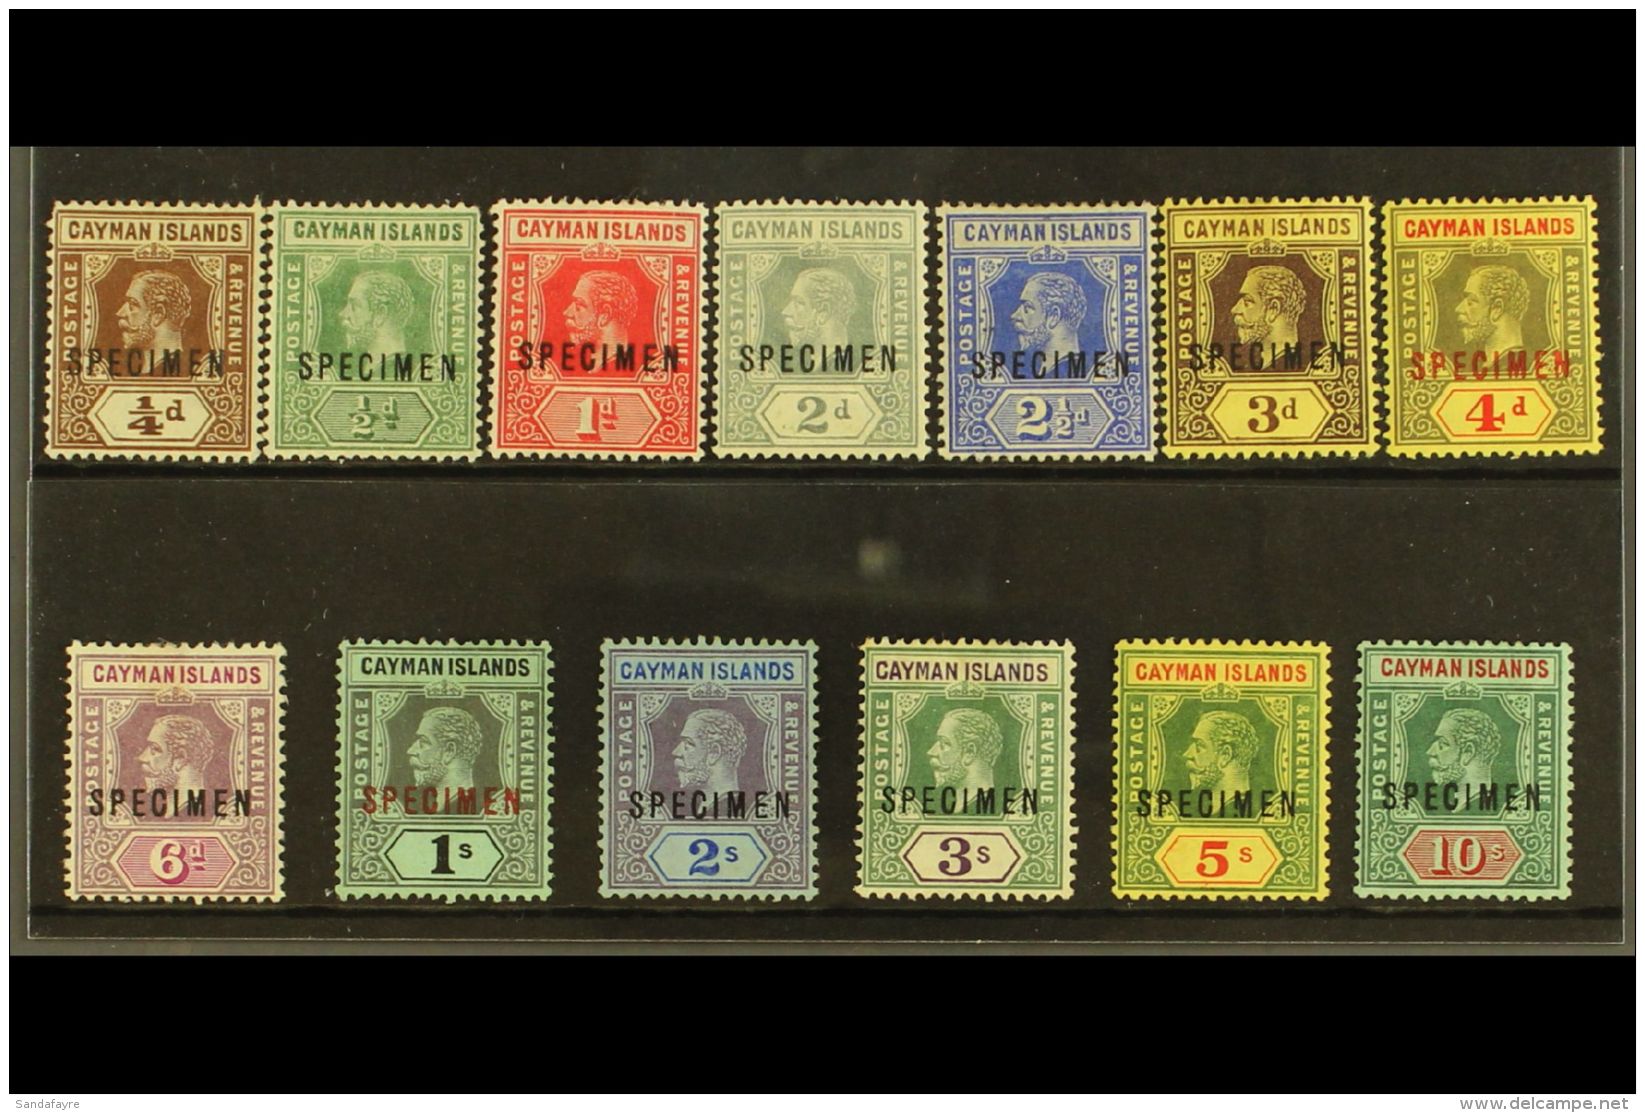 1912-20 SPECIMENS  KGV Complete Set With "SPECIMEN" Overprints, SG 40s/52s, Fine Mint With Good Colour.... - Caimán (Islas)